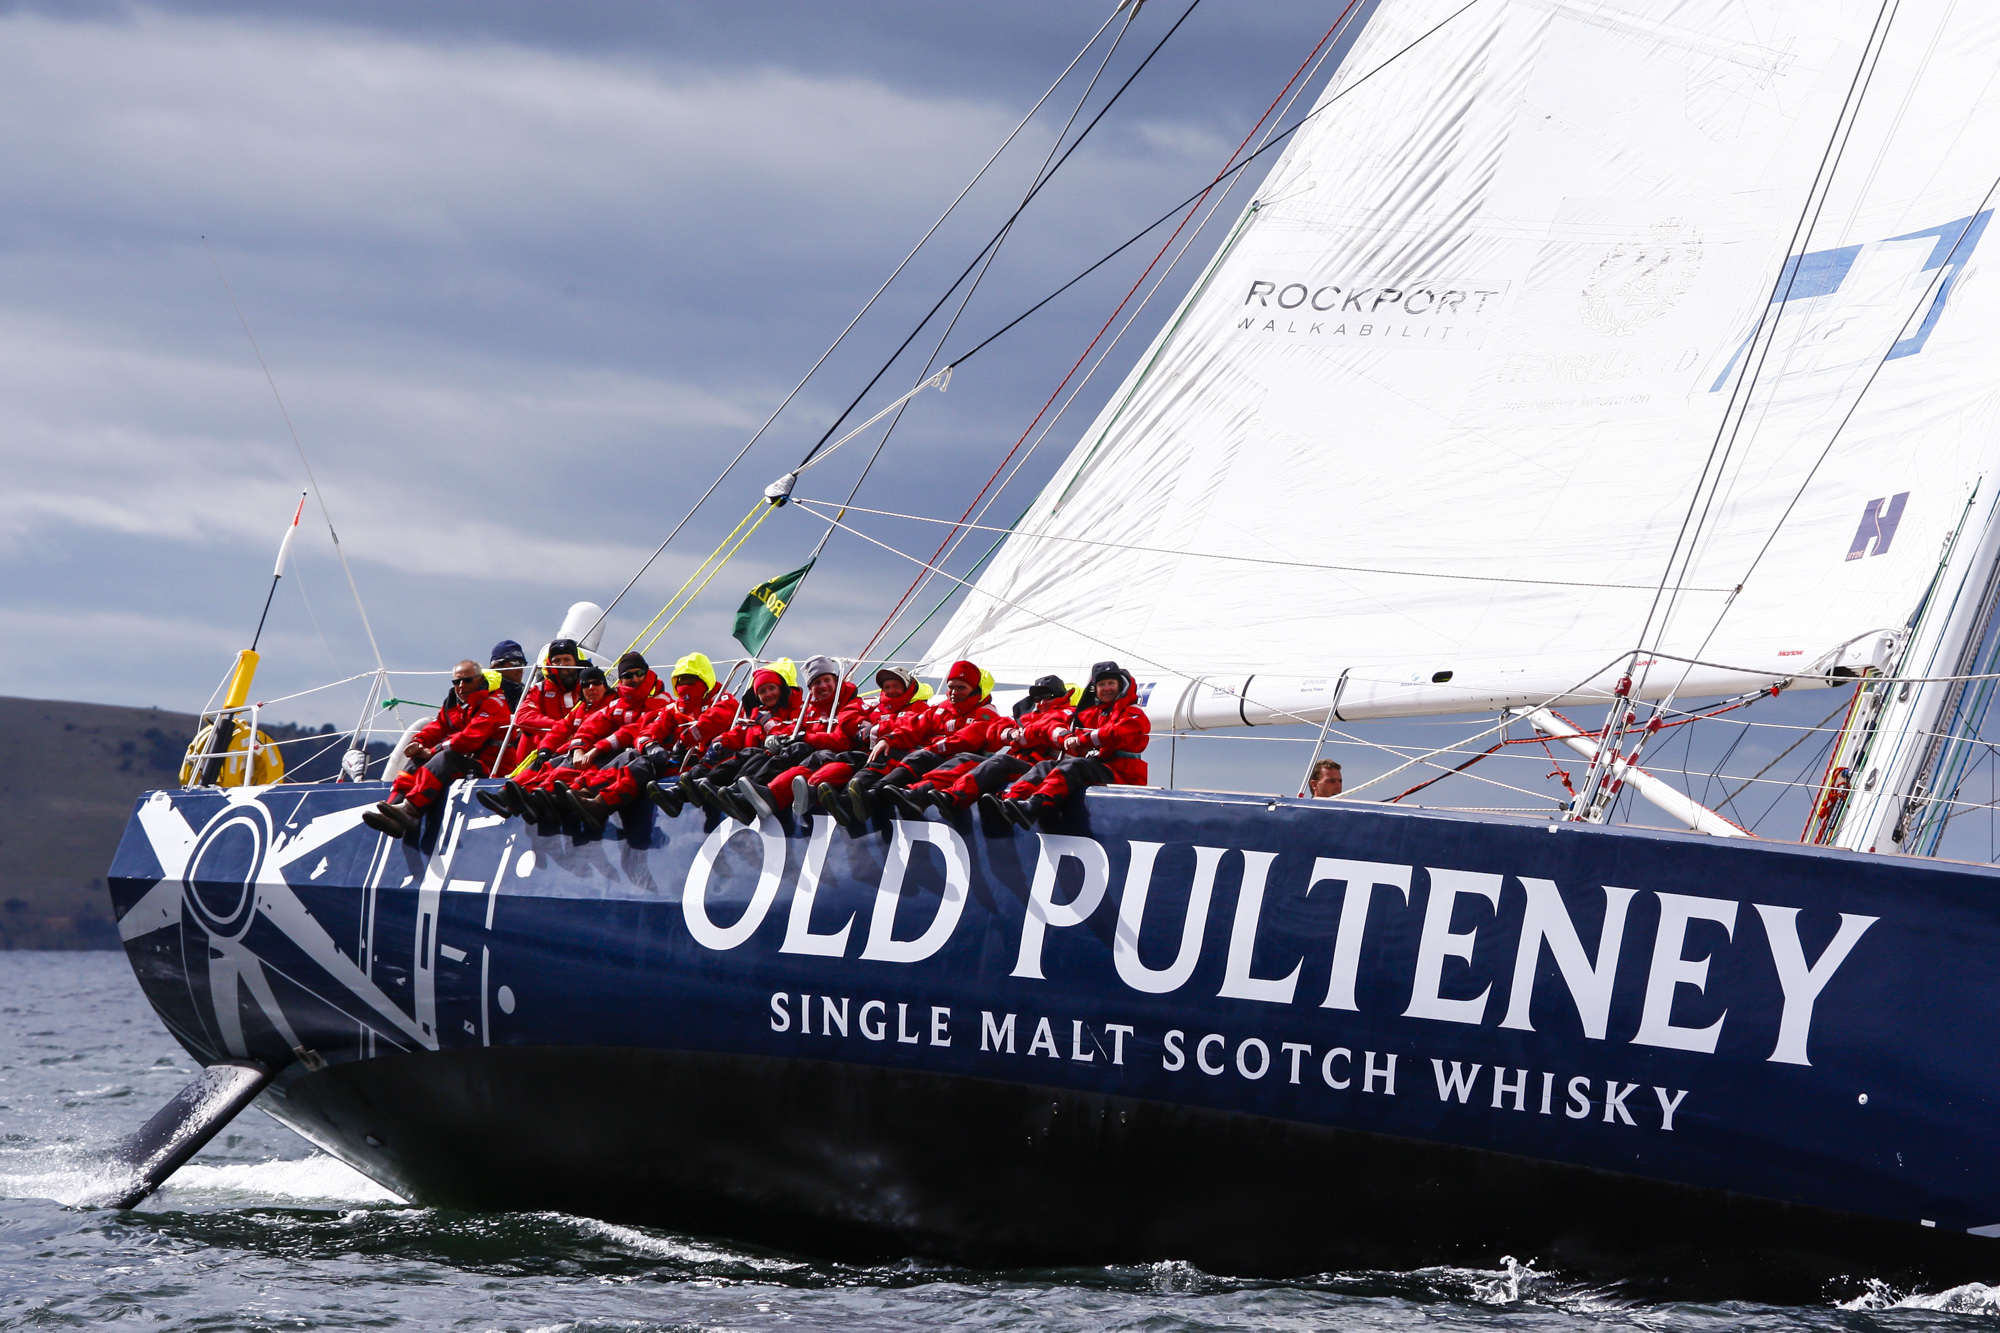 Old Pulteney, skippered by Patrick van der Zijden, will head to the Scotland Boat Show